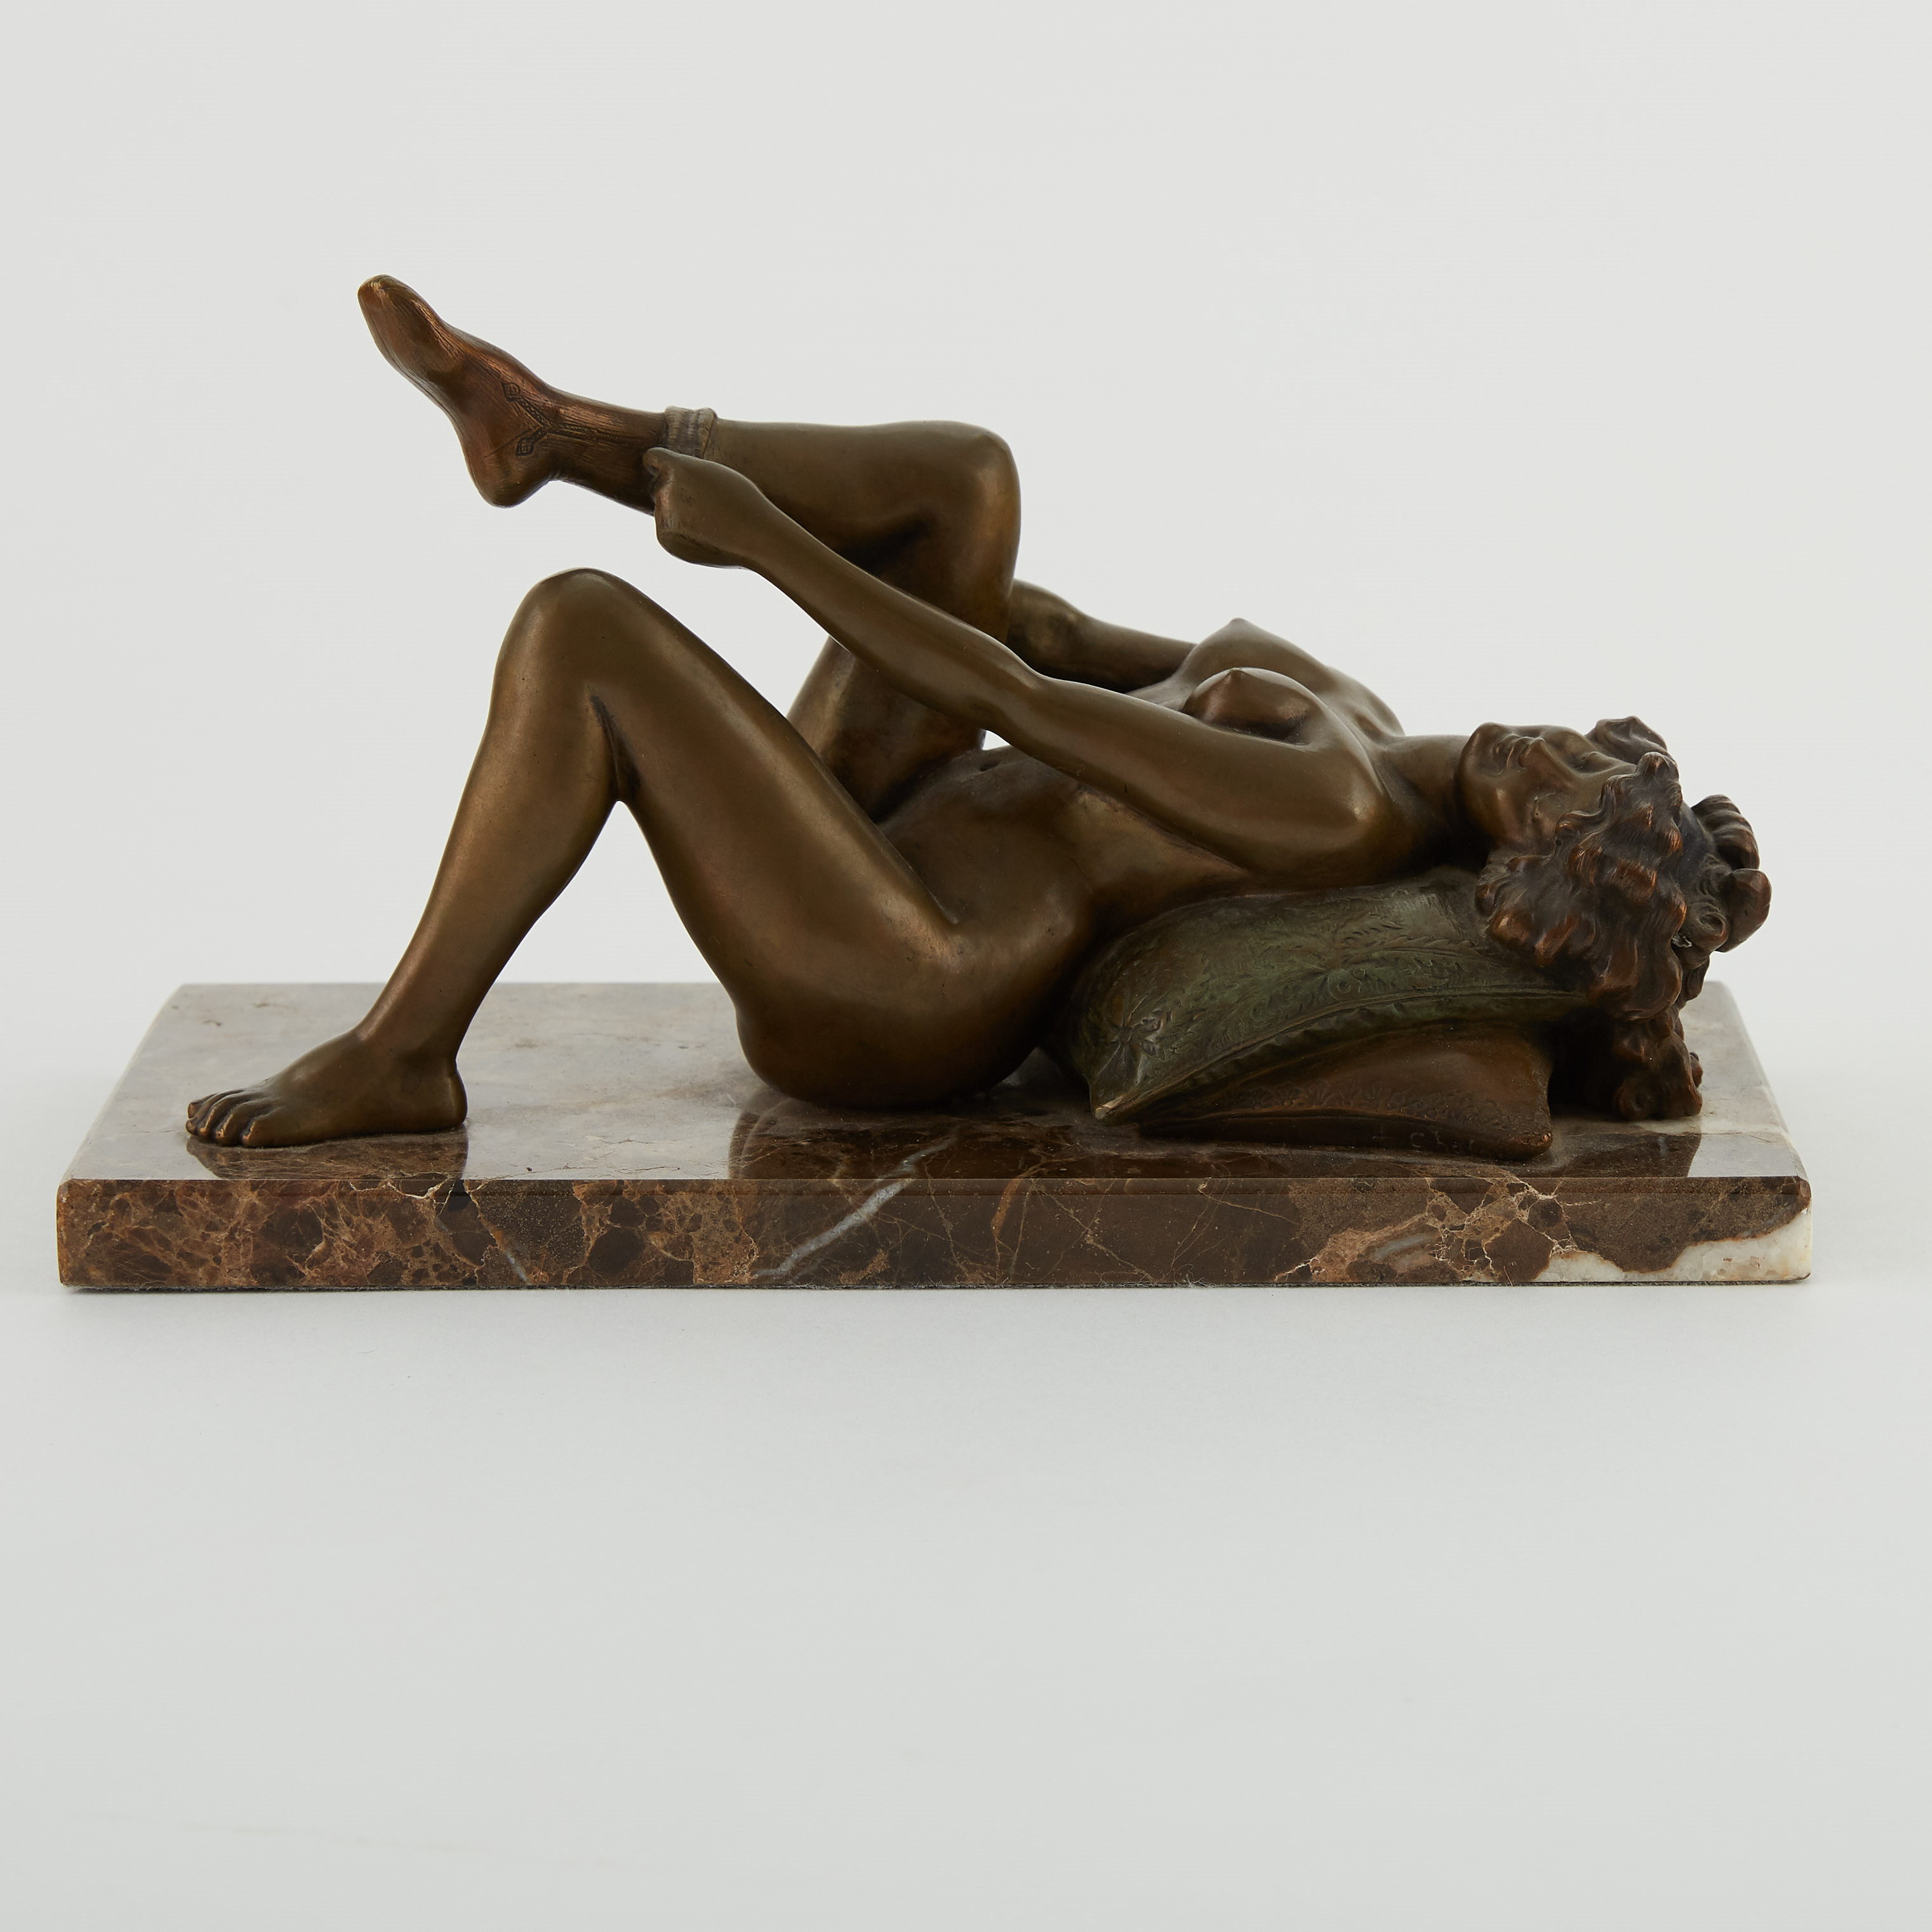 Lot 040: Louis Chalon "Recumbent Female Nude" Bronze Sculpture